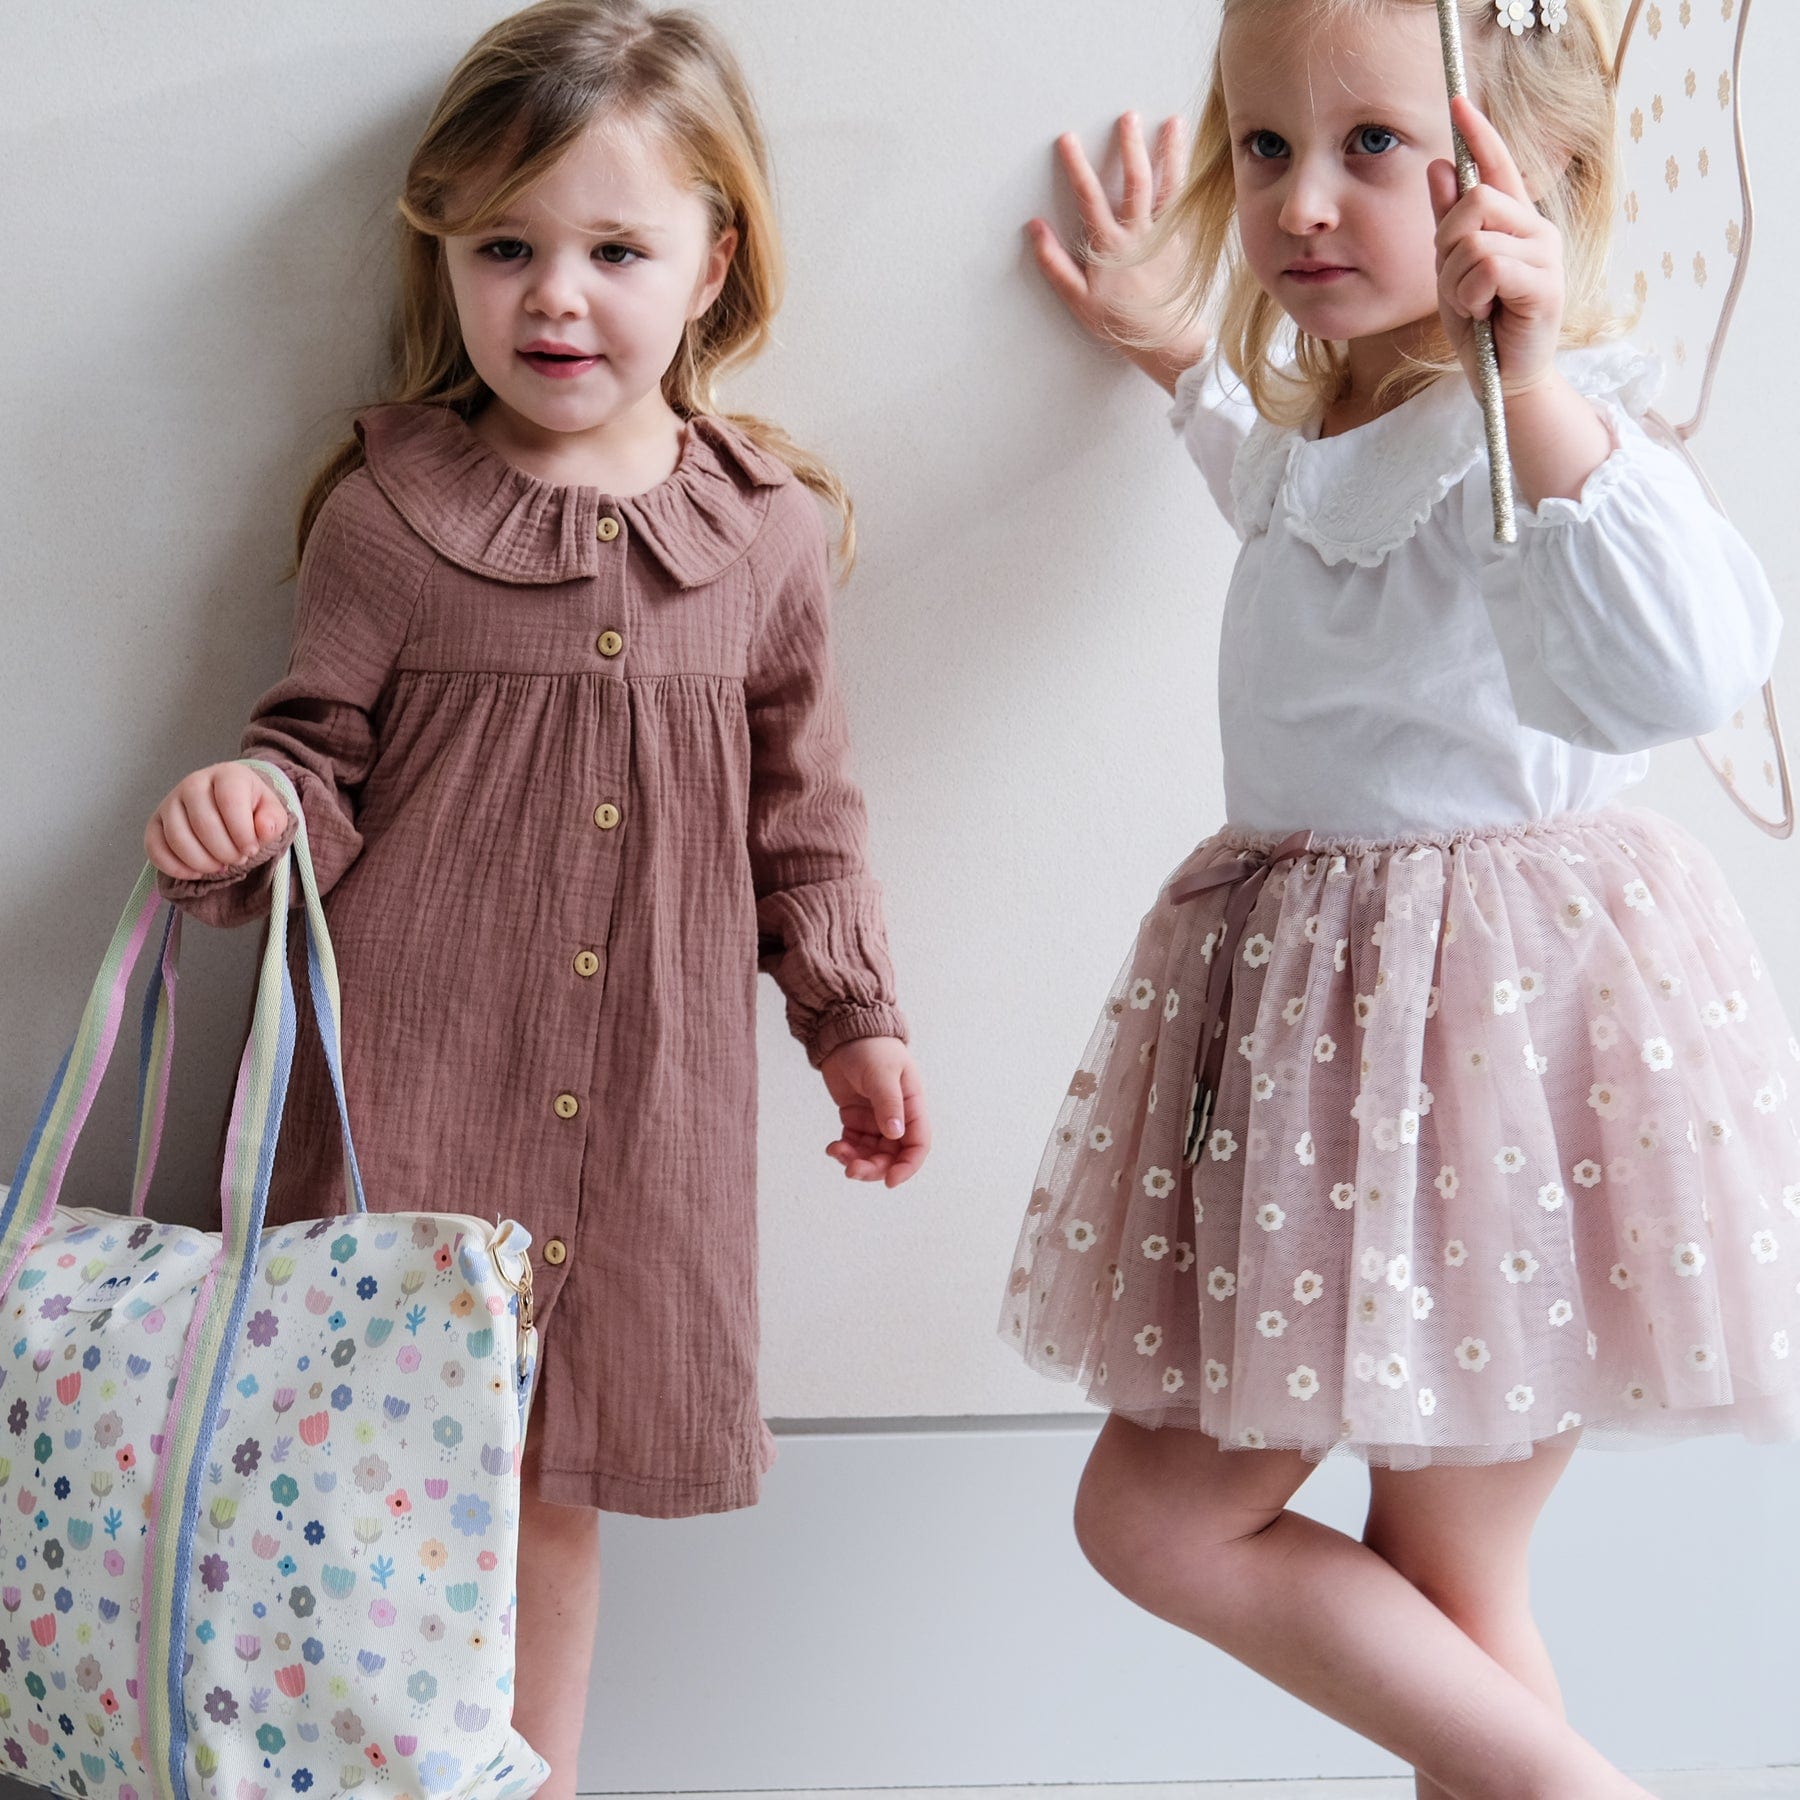 Mimi & Lula Girls Accessory Weekender Bag - Spring Days